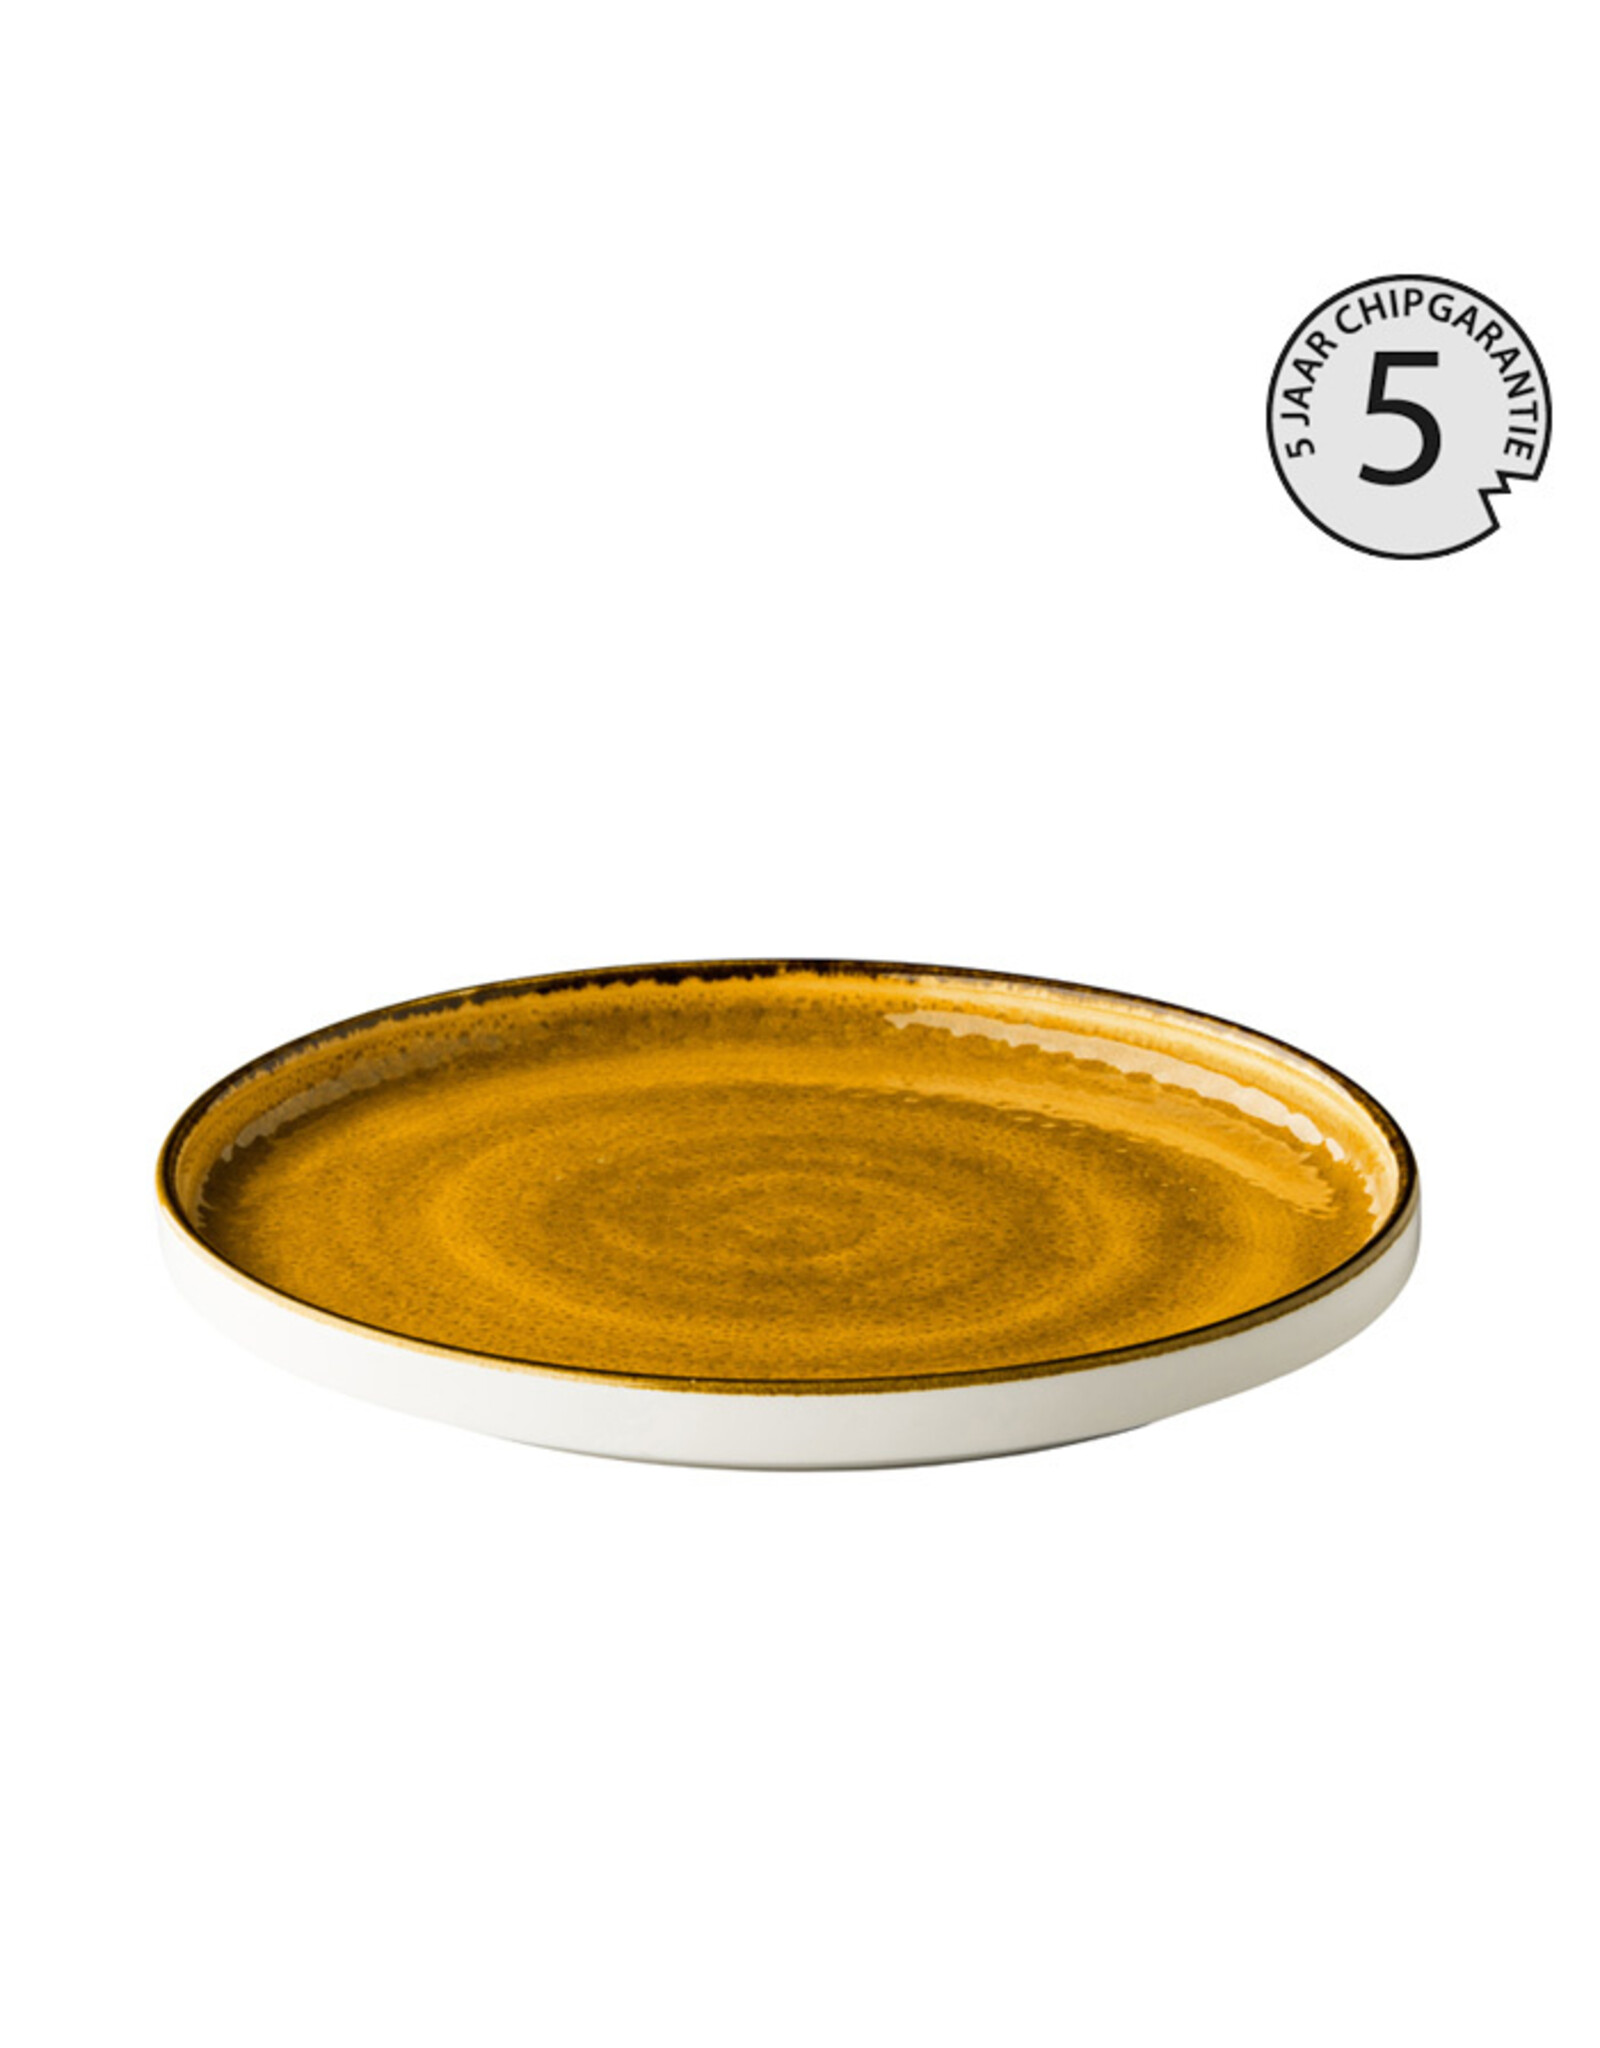 Stylepoint Jersey rond bord opstaande rand geel 25,4 cm stapelbaar - 5 jaar chipgarantie